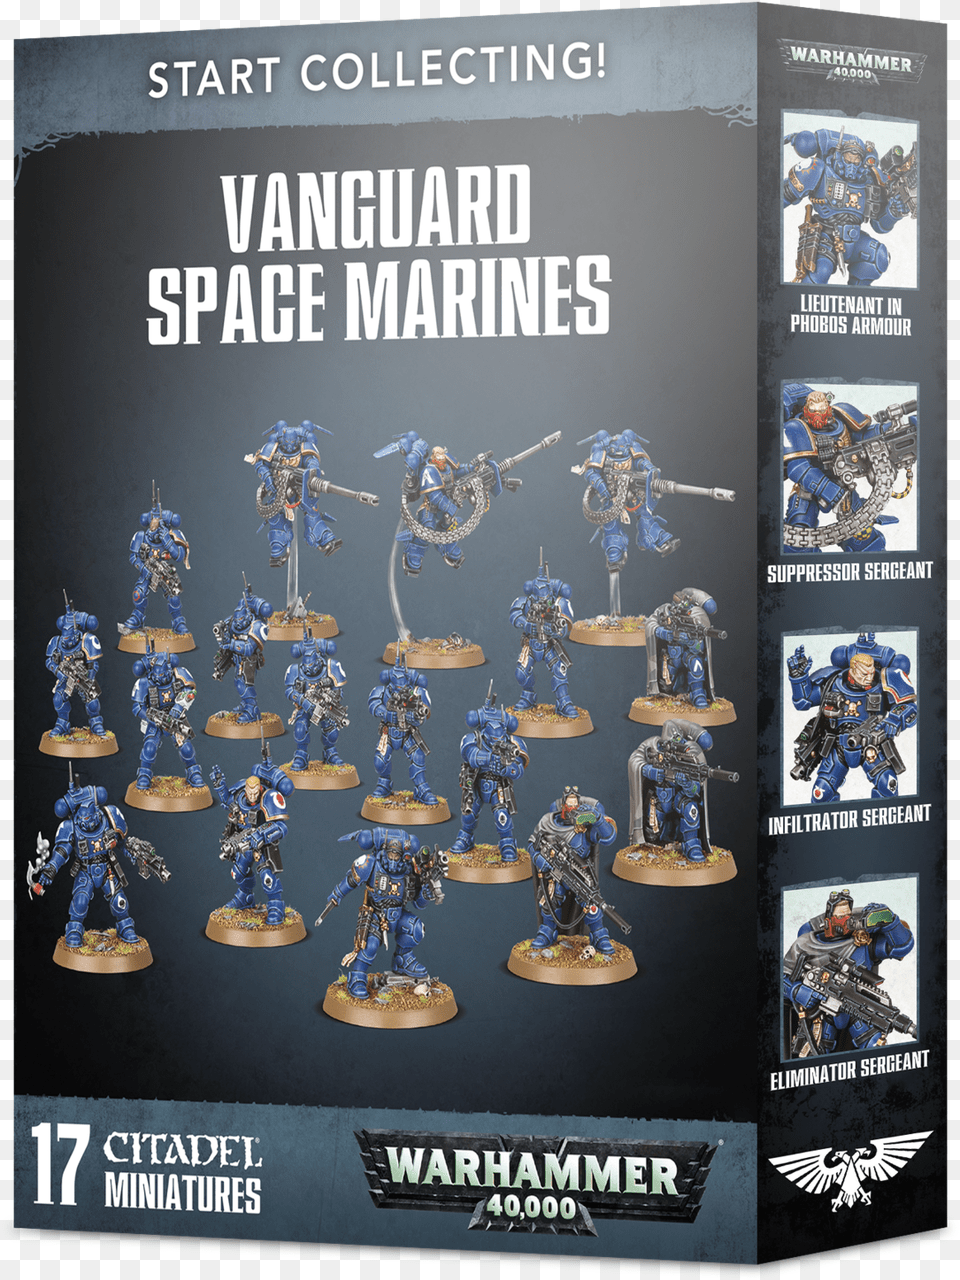 Warhammer Start Collecting Vanguard Space Marines Vanguard Space Marines, Toy, Baby, Person, Robot Png